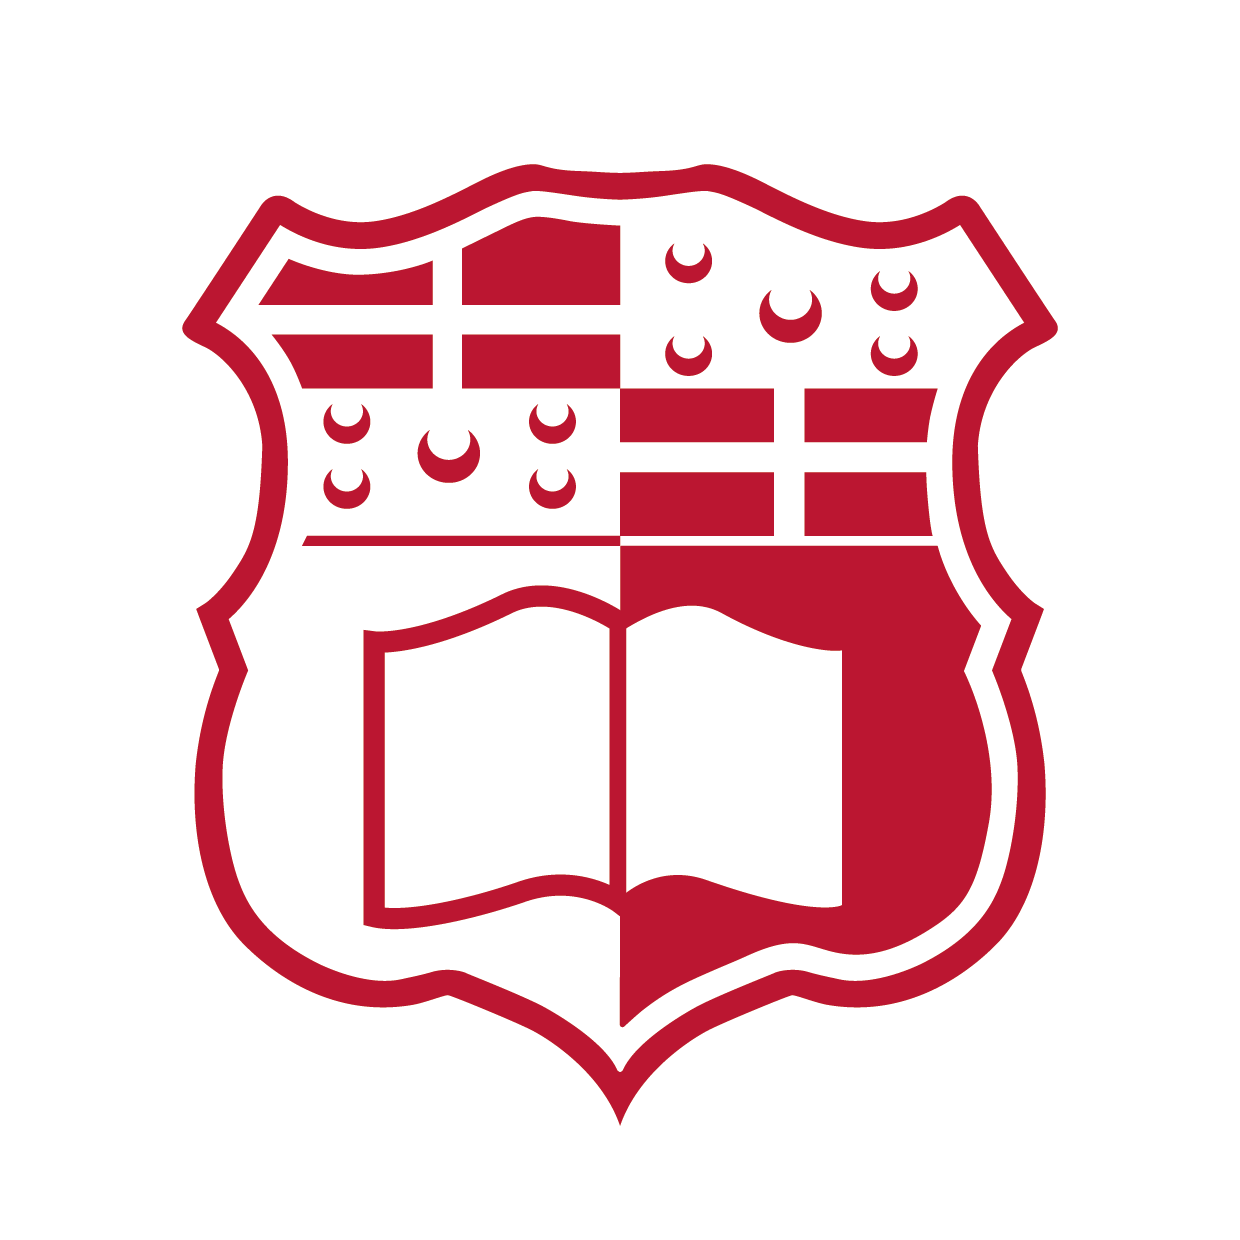 Malta Logo - What do you think about the new University of Malta logo? : malta